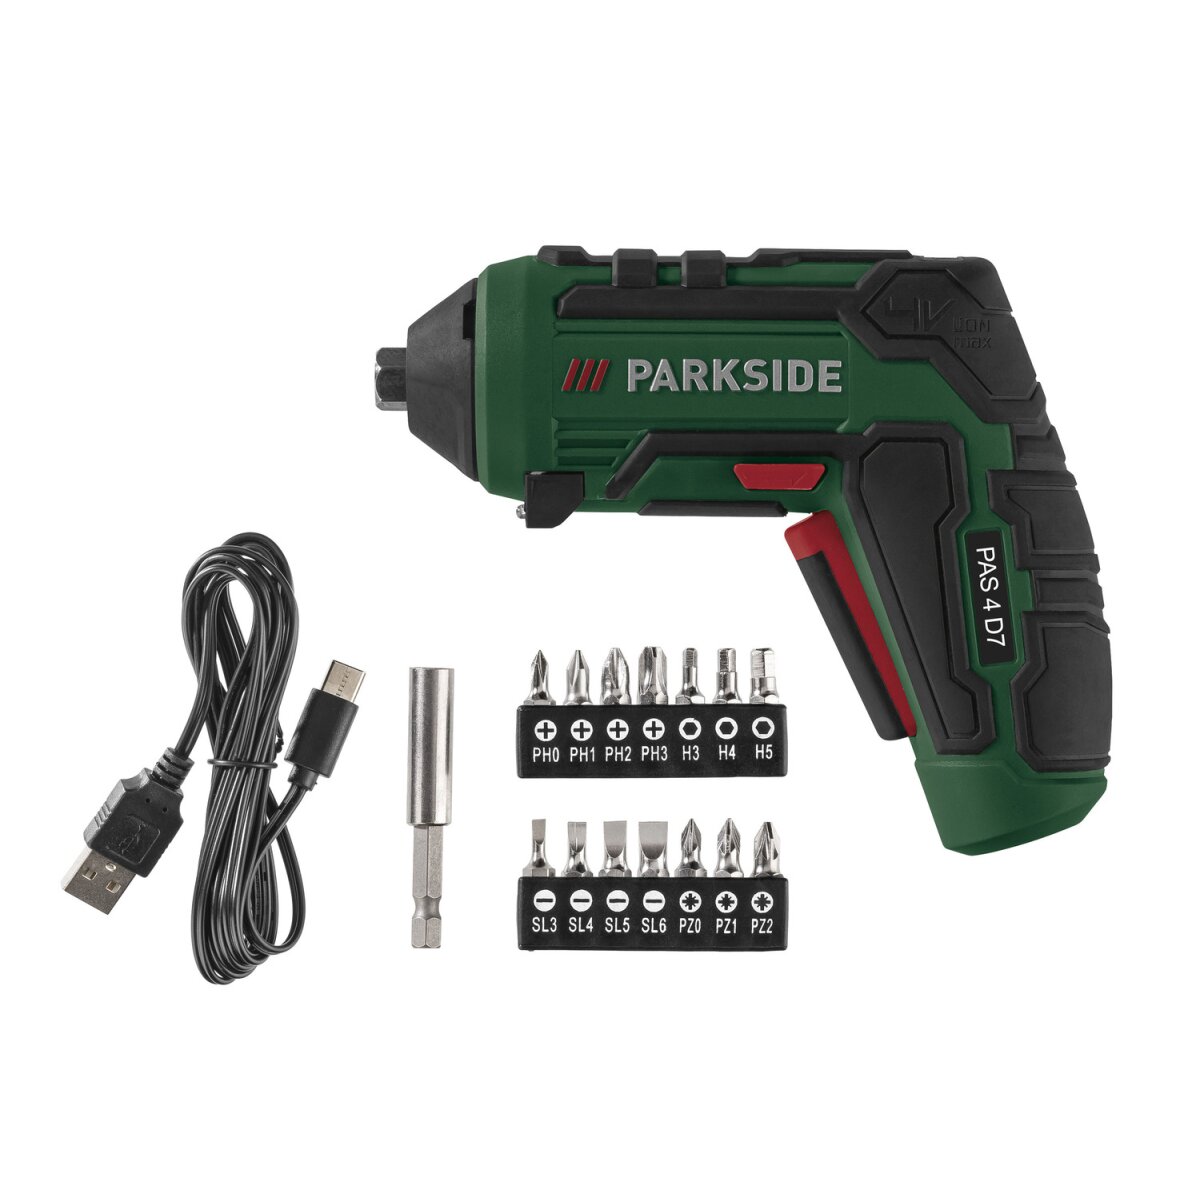 PARKSIDE® 4 V-Akku-Schrauber 22,99 B-Ware USB-Ladekabel - € neuwertig, »PAS mit D7«, 4